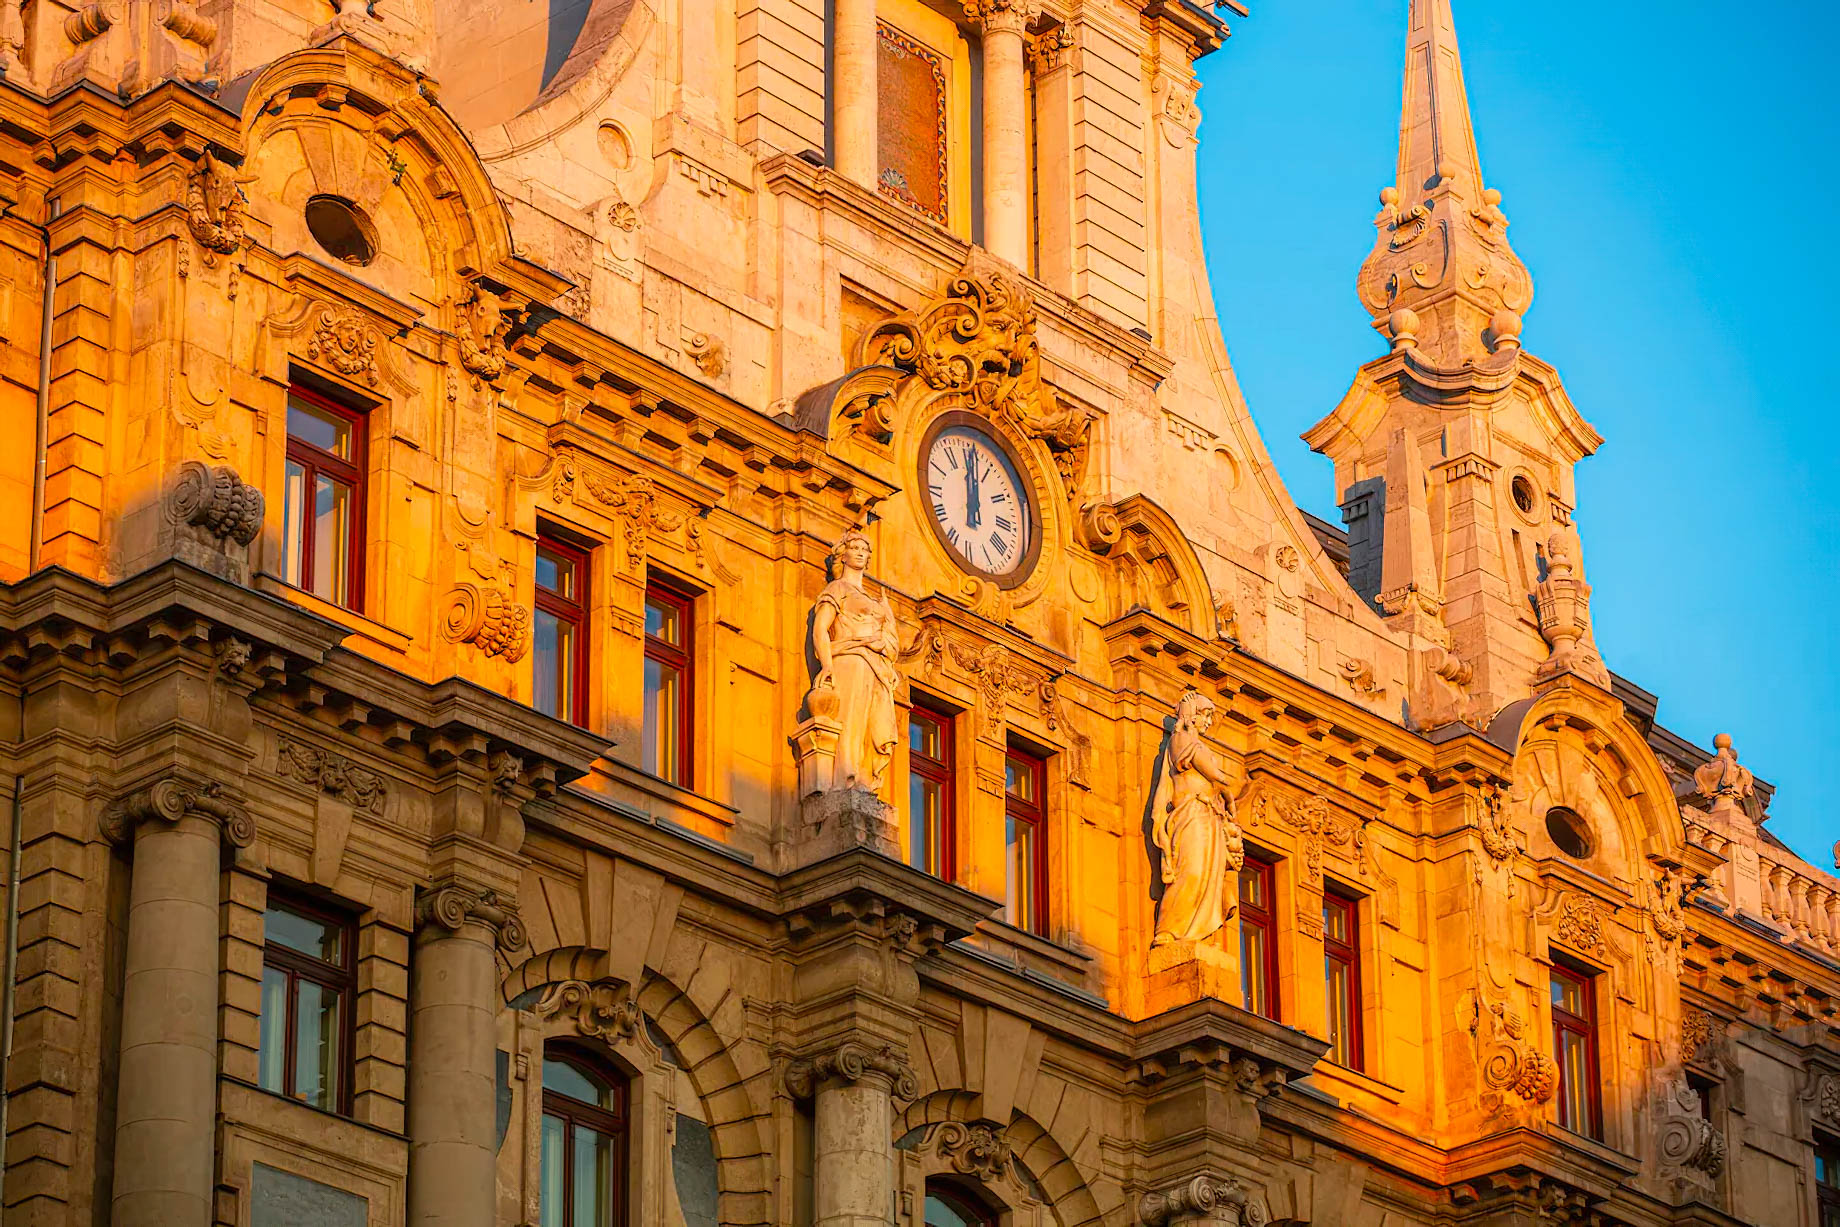 Anantara New York Palace Budapest Hotel – Hungary – Hotel Exterior Decor